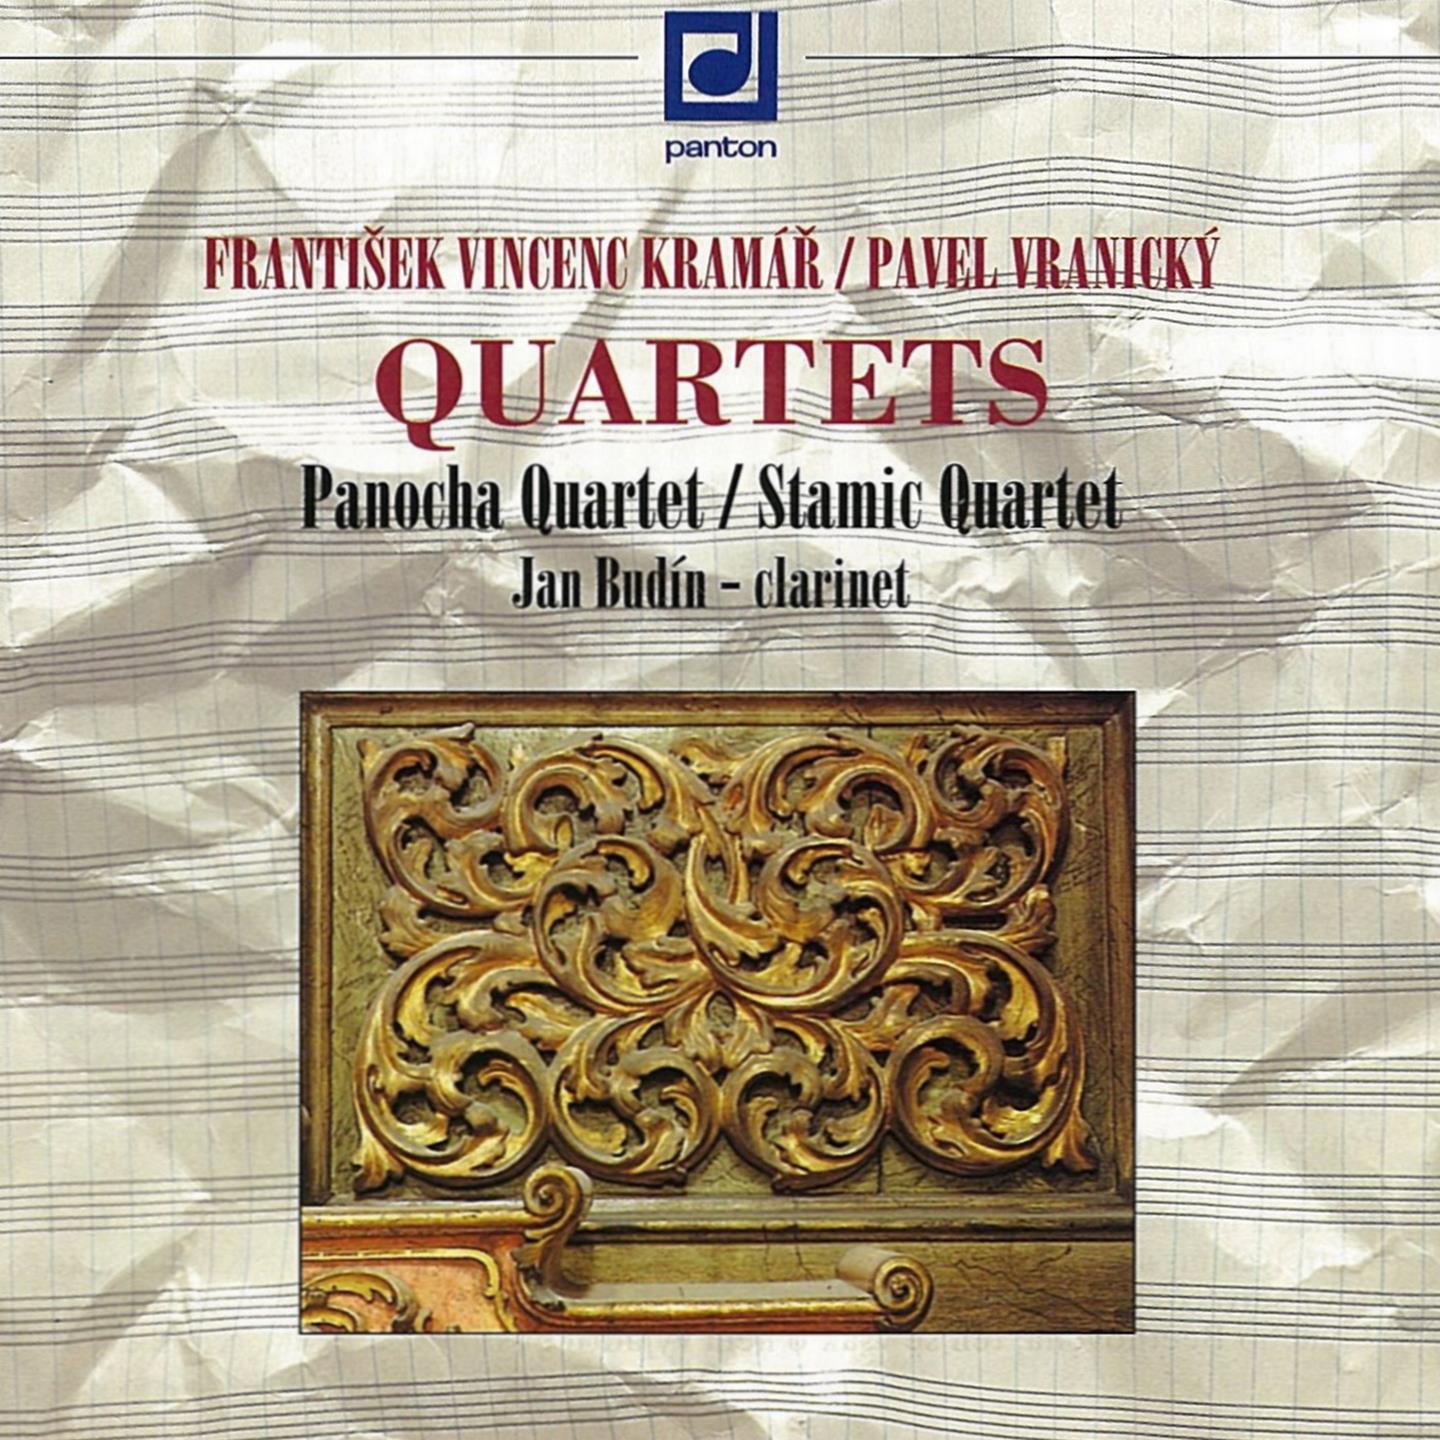 String Quartets, Op. 16, No. 6 in D Minor, Op. 16: II. Poco adagio